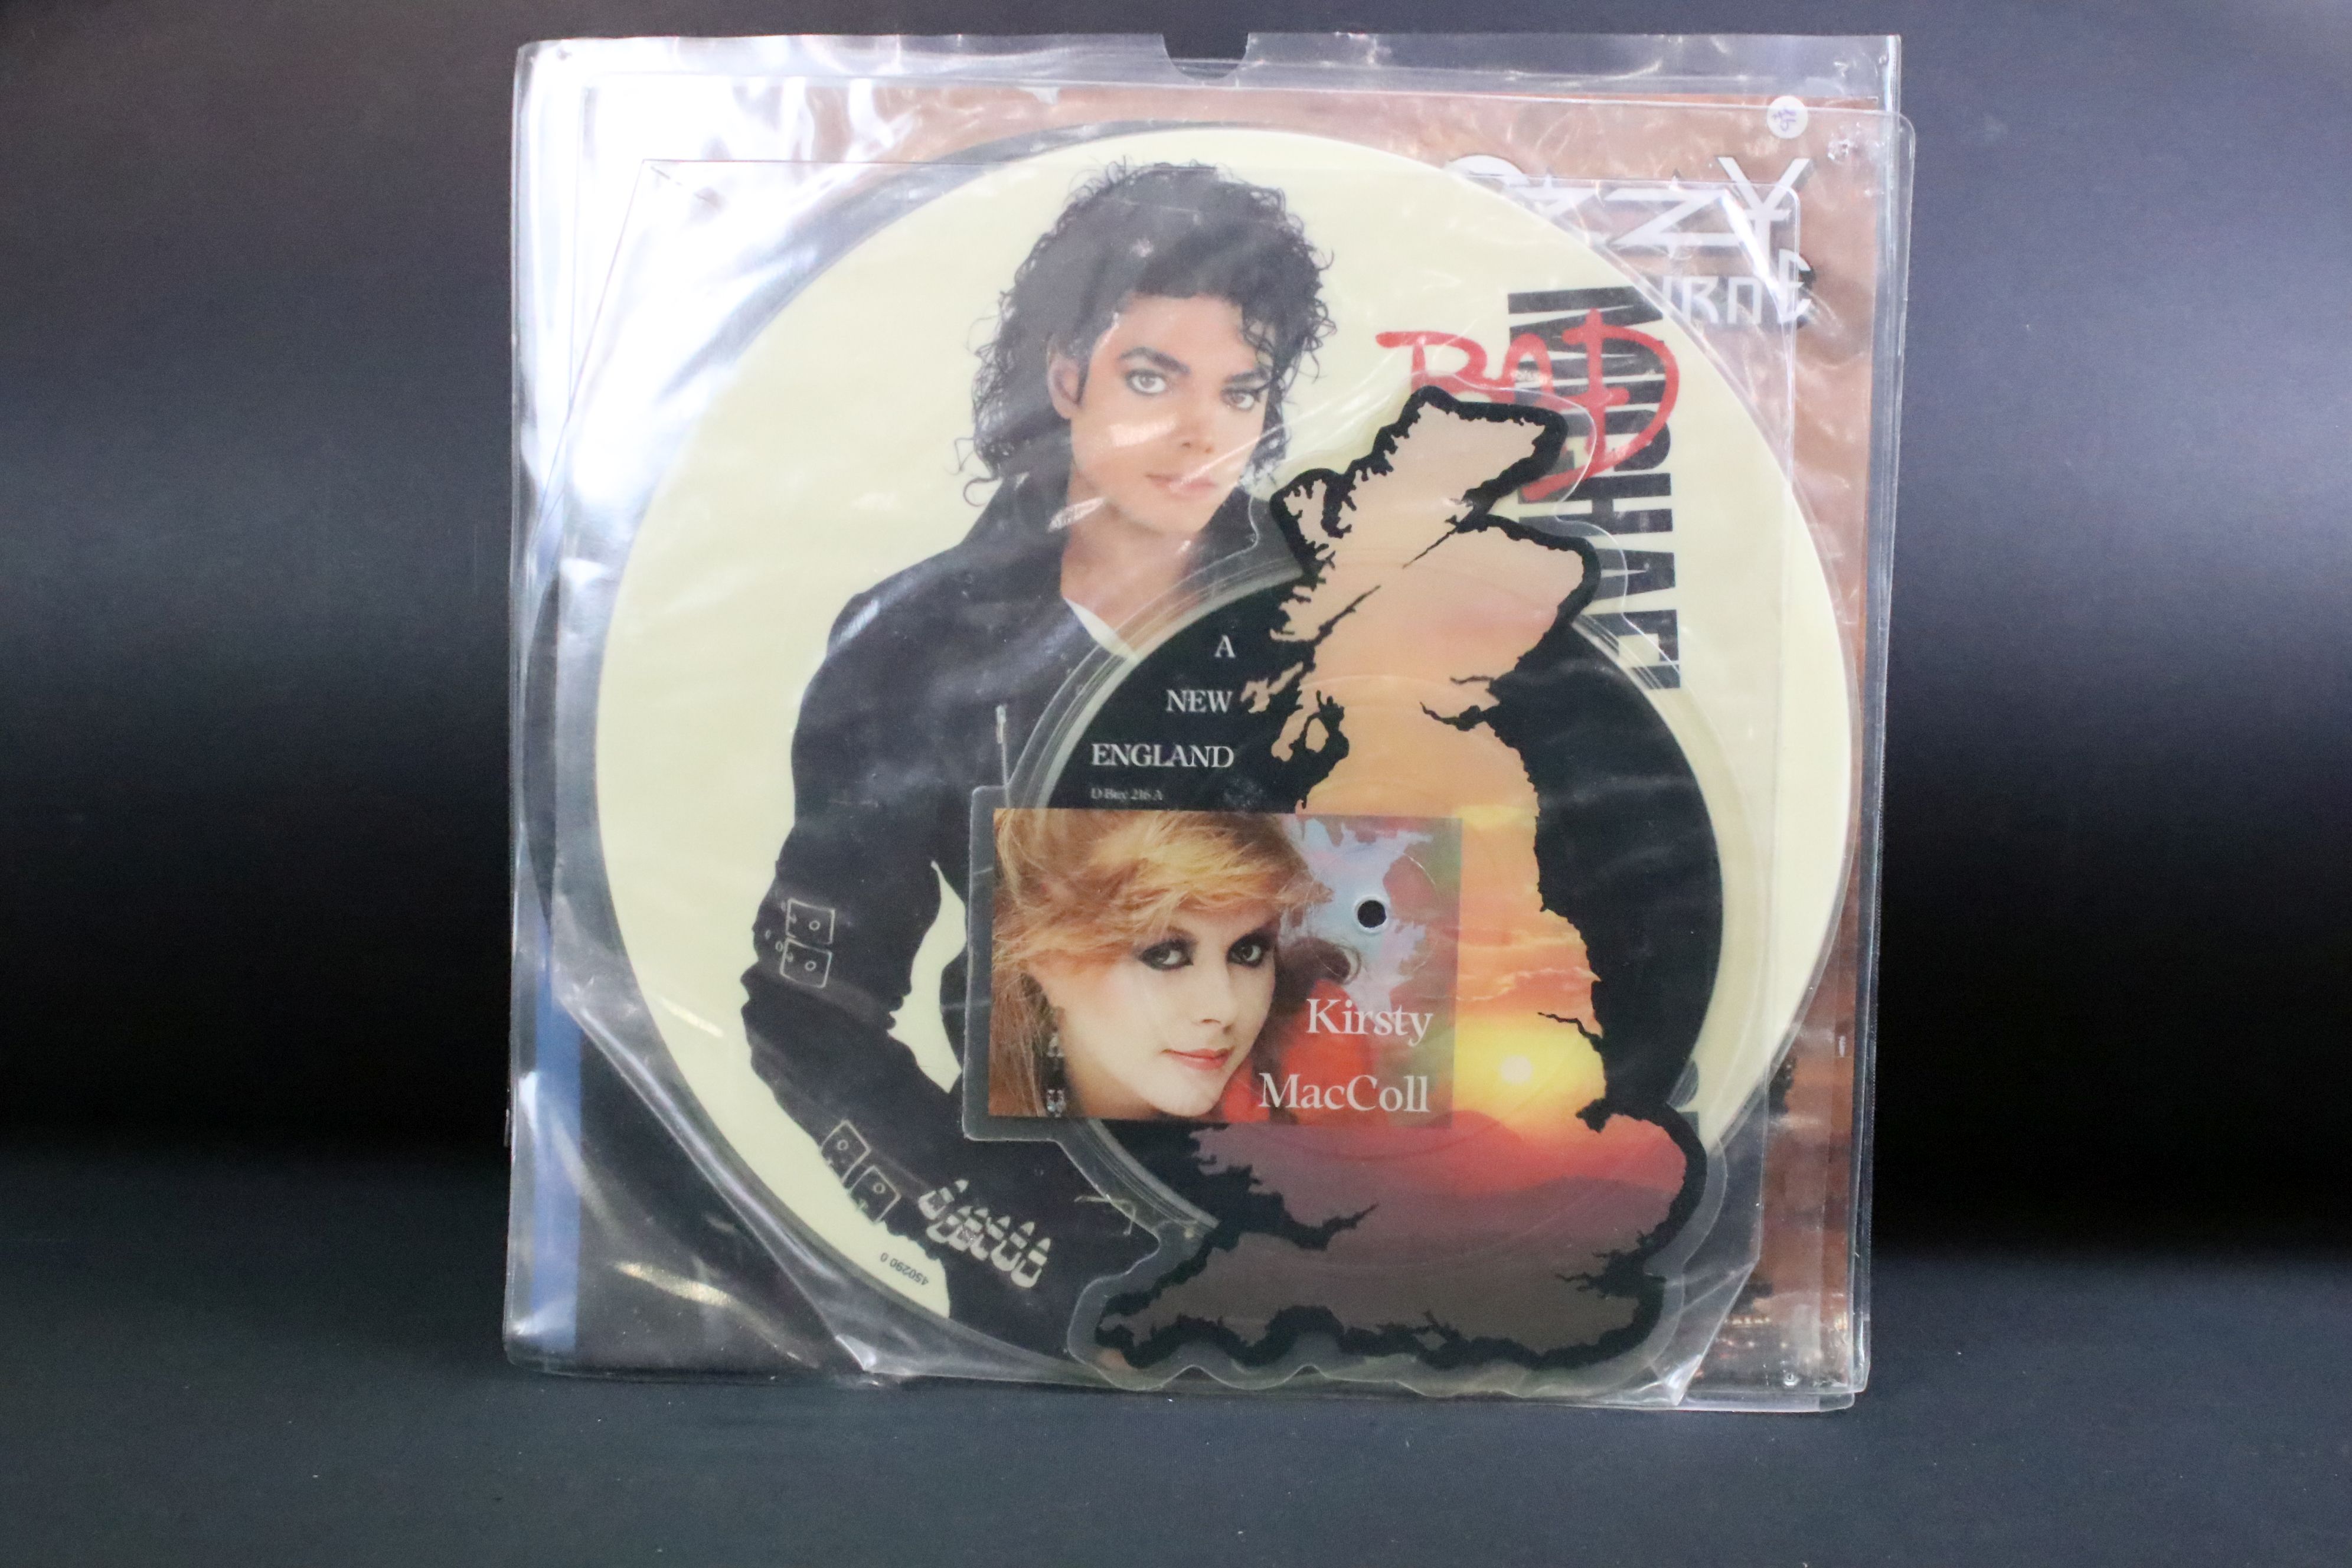 Vinyl - 10 Rock & Pop picture discs / shaped discs to include: Michael Jackson - Bad (Album - Image 3 of 8